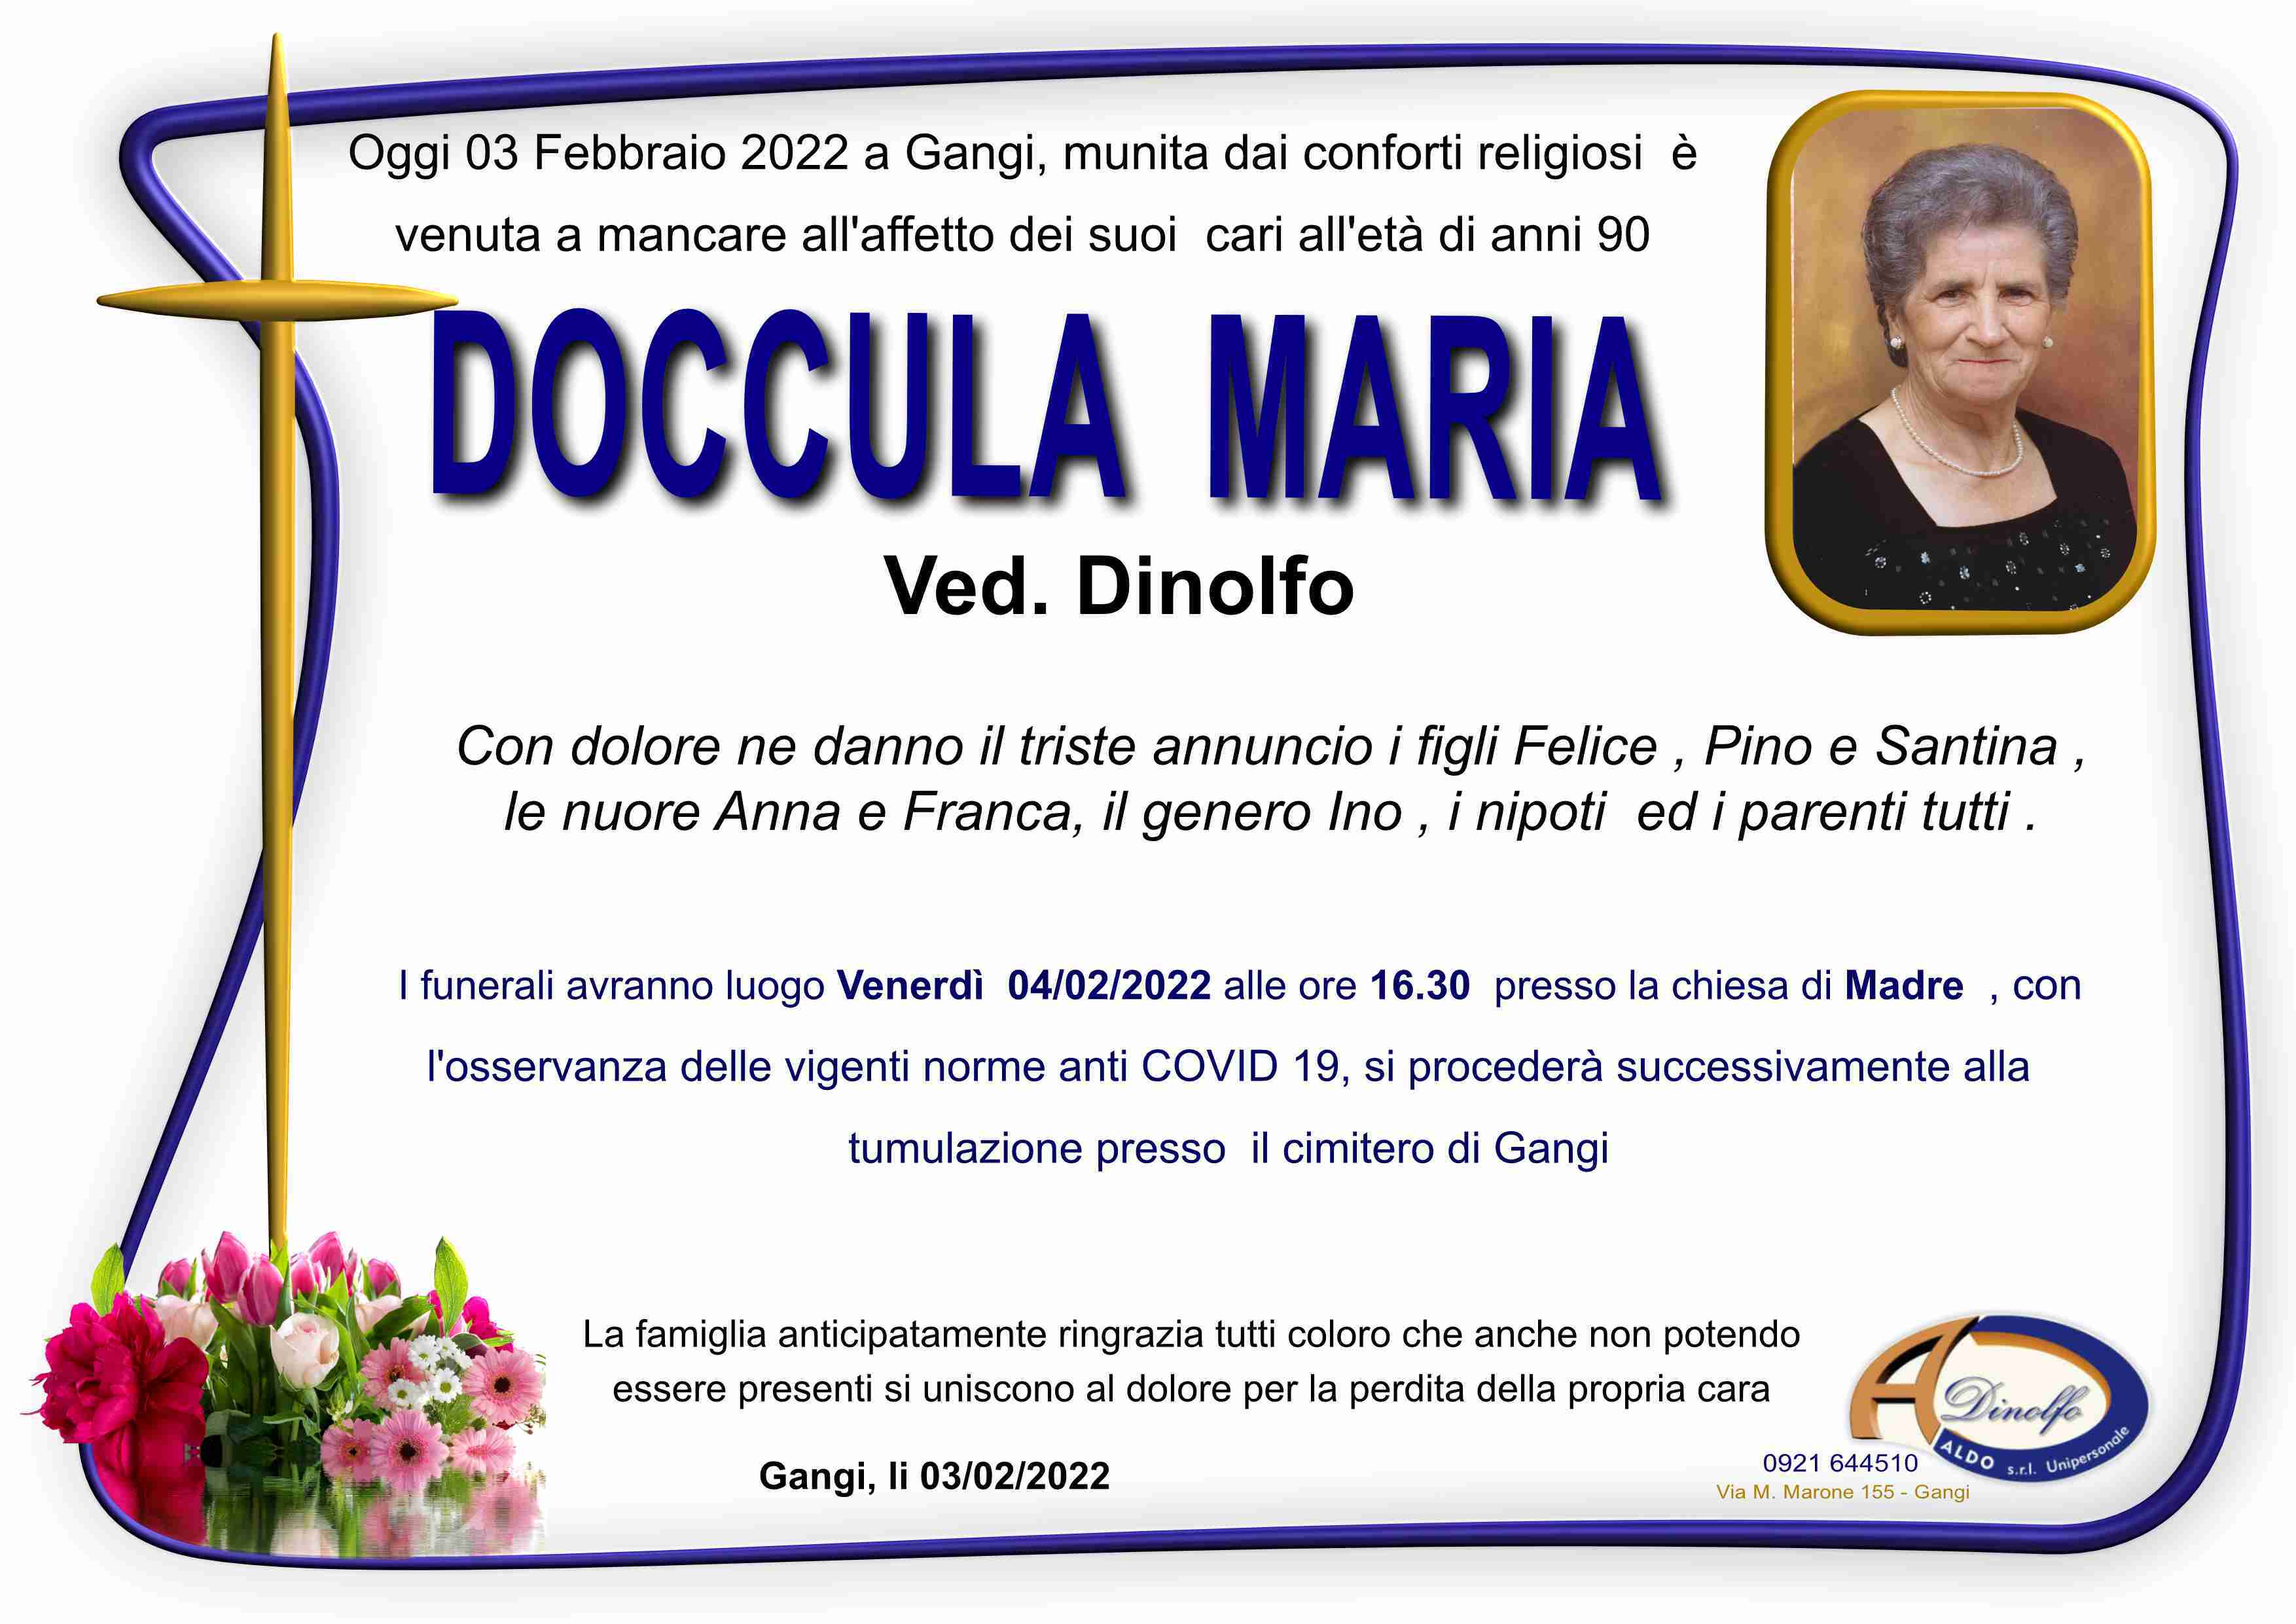 Maria Doccula